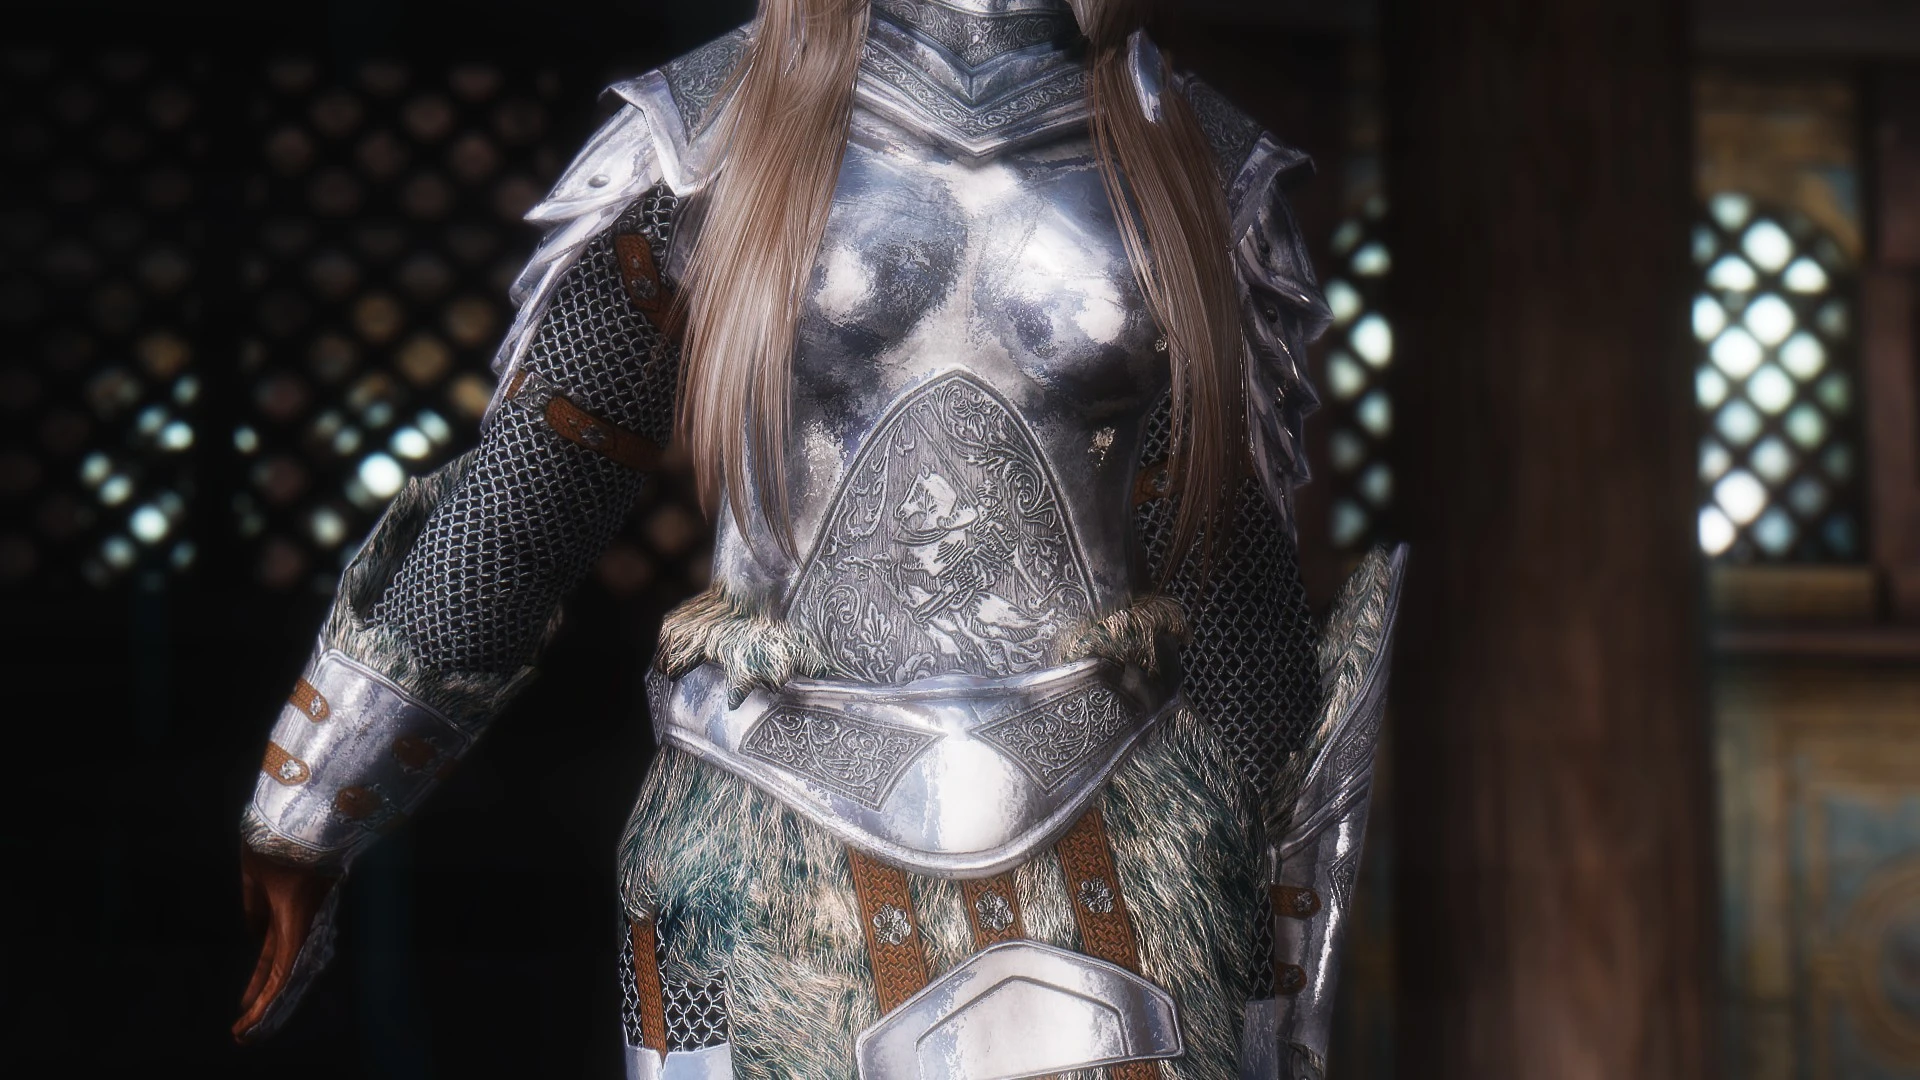 Spoa Silver Knight Armor Female Version At Skyrim Nexus Mods And